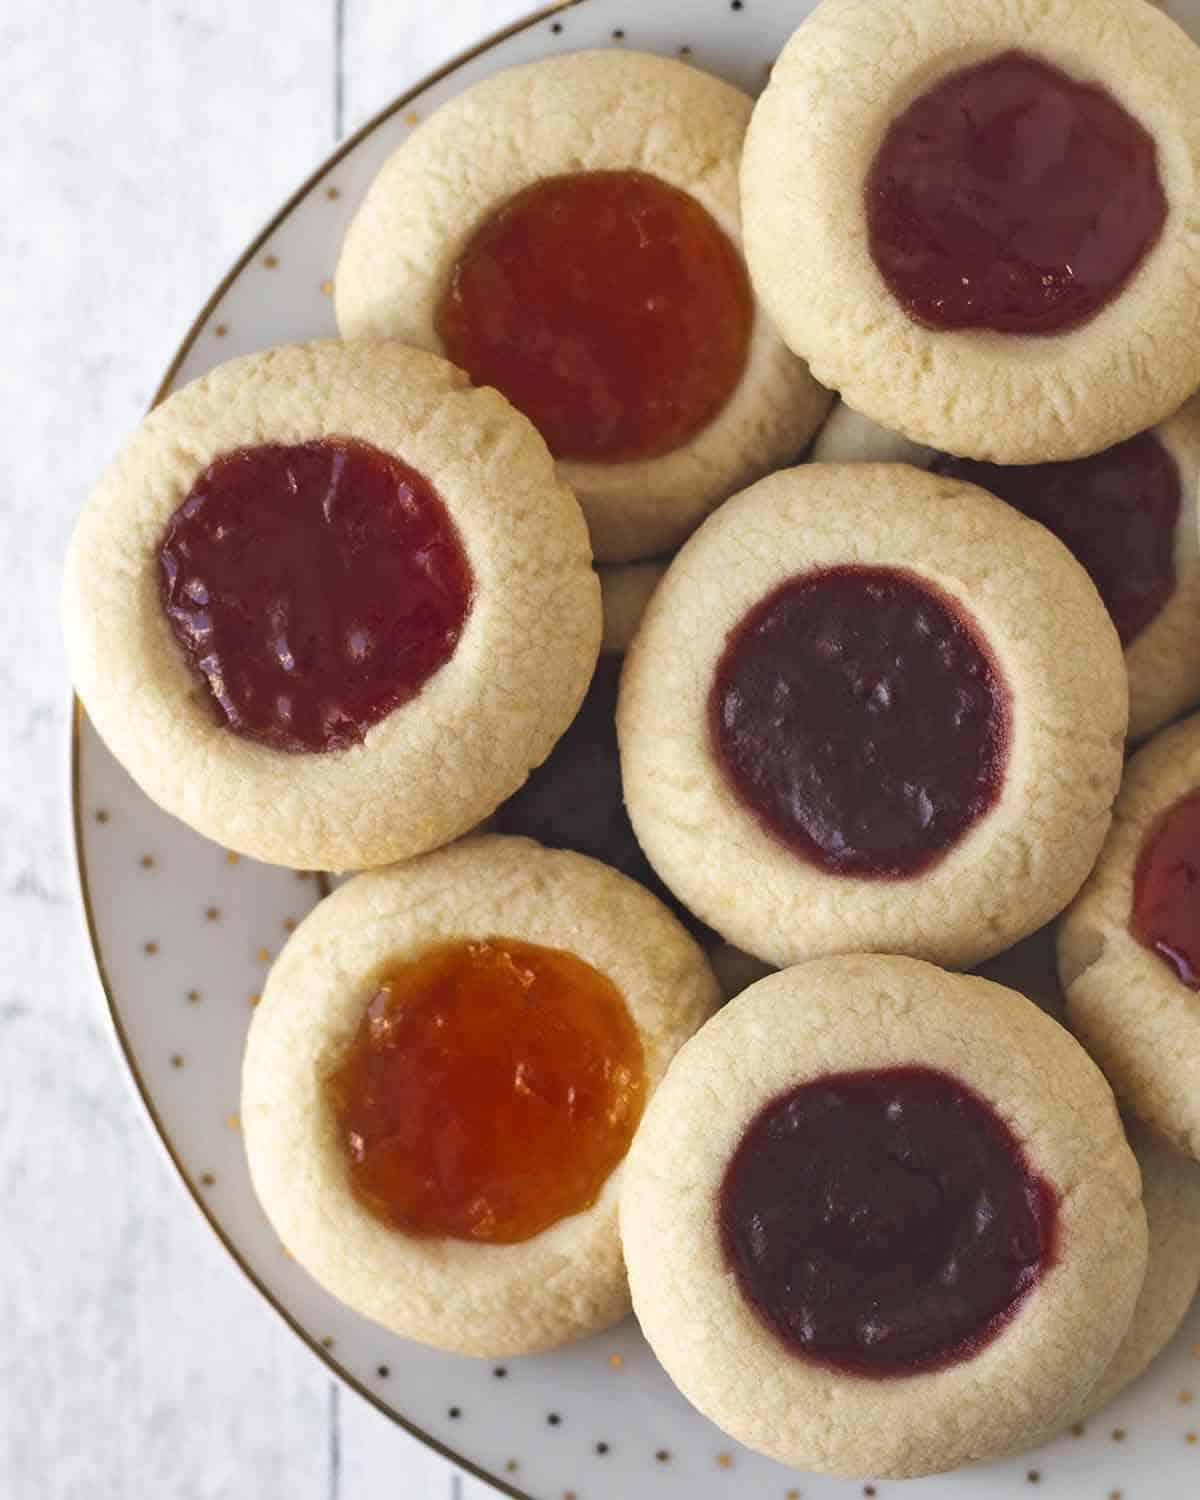 An overhead shot showing a plate full of vegan thumbprint cookies.